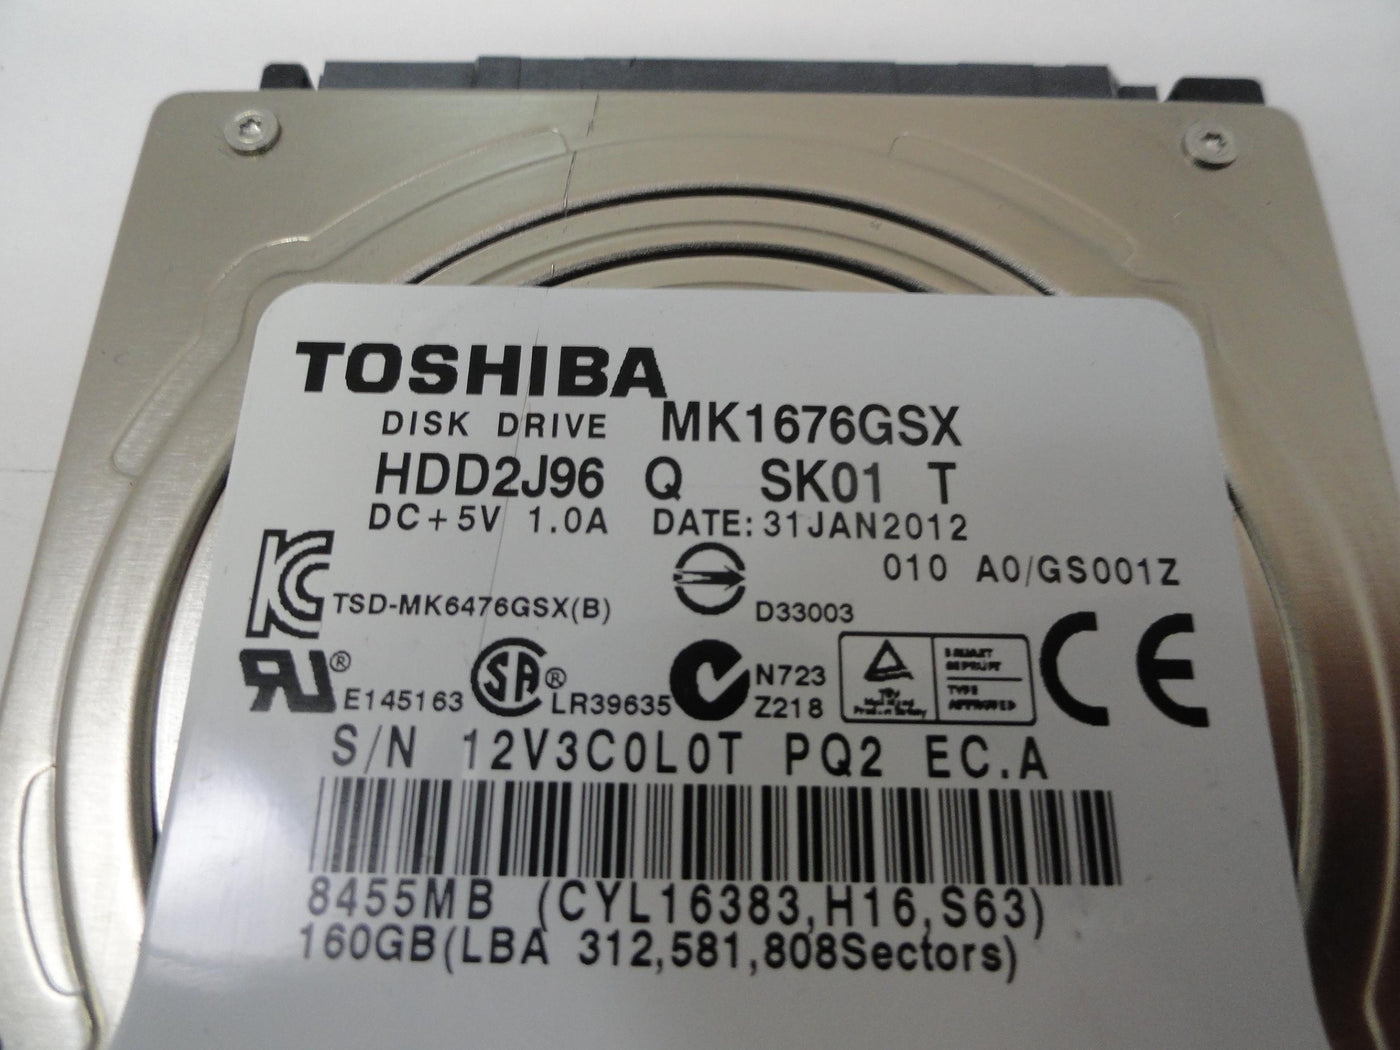 PR23473_HDD2J96_Toshiba 160Gb SATA 5400rpm 2.5in HDD - Image2